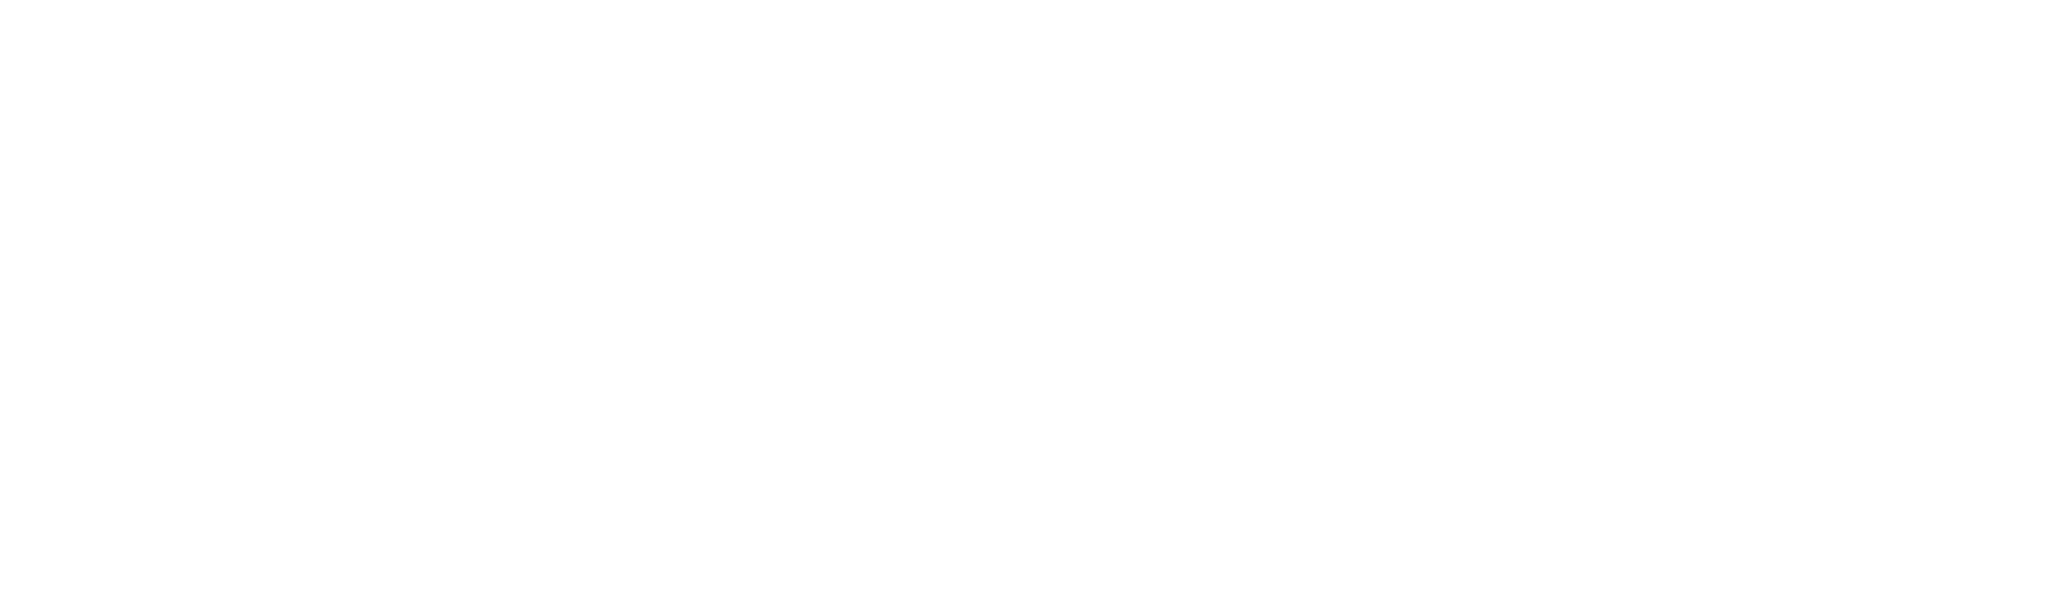 Katz-Digital-Video-Logo-Long-39-2048x615-2